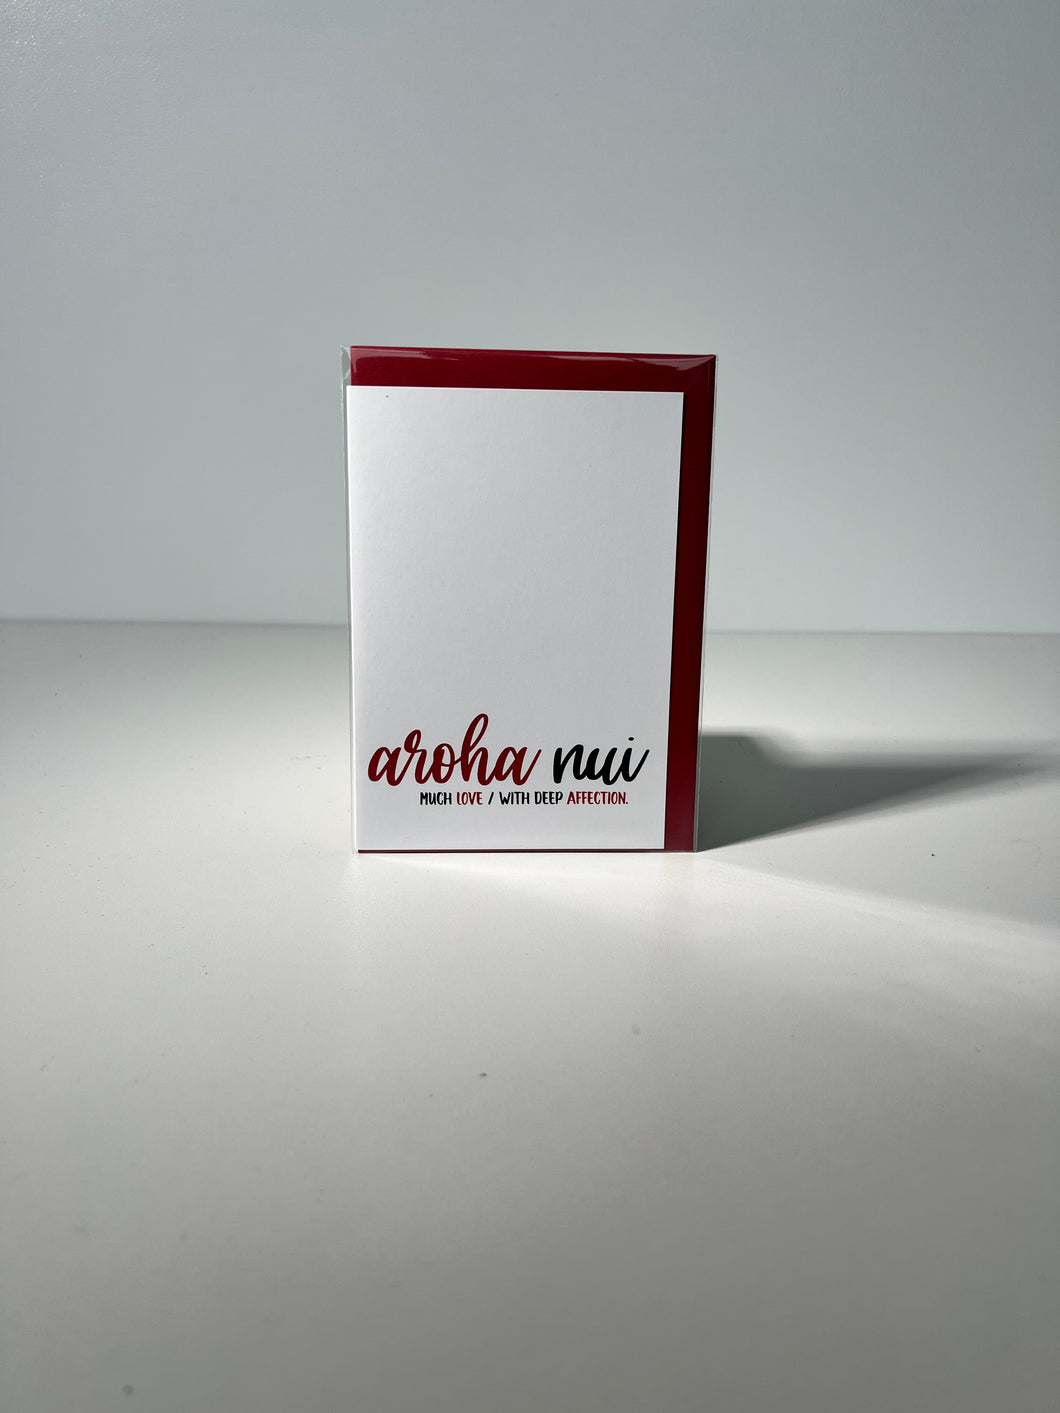 Aroha Nui Cards - Much Love / With Deep Affection